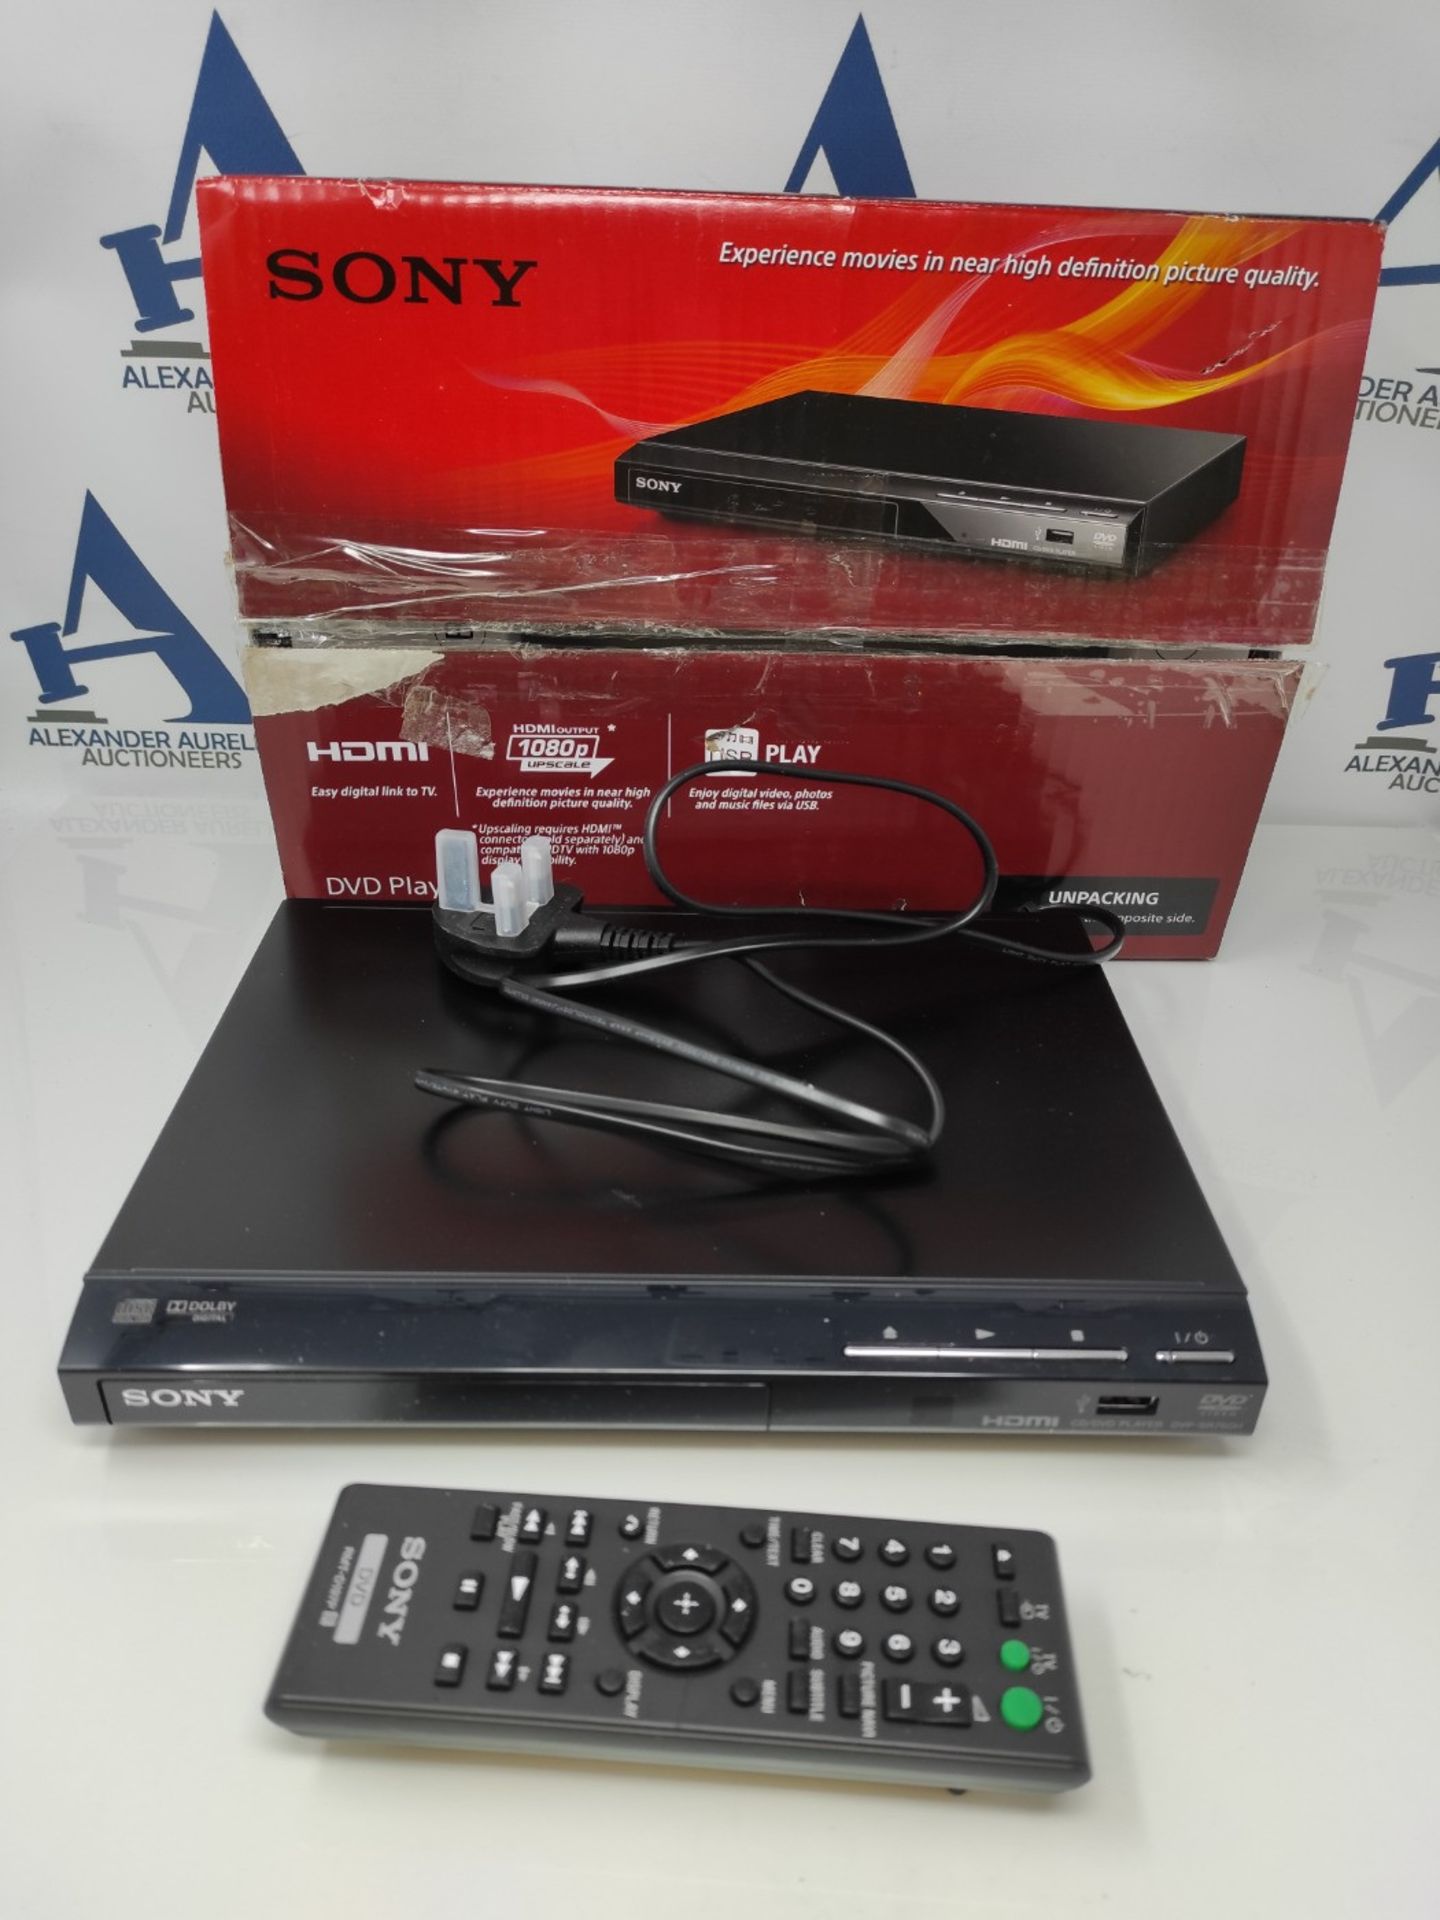 Sony DVPSR760H DVD Upgrade Player (HDMI, 1080 Pixel Upscaling, USB Connectivity), UK 3 - Image 2 of 2